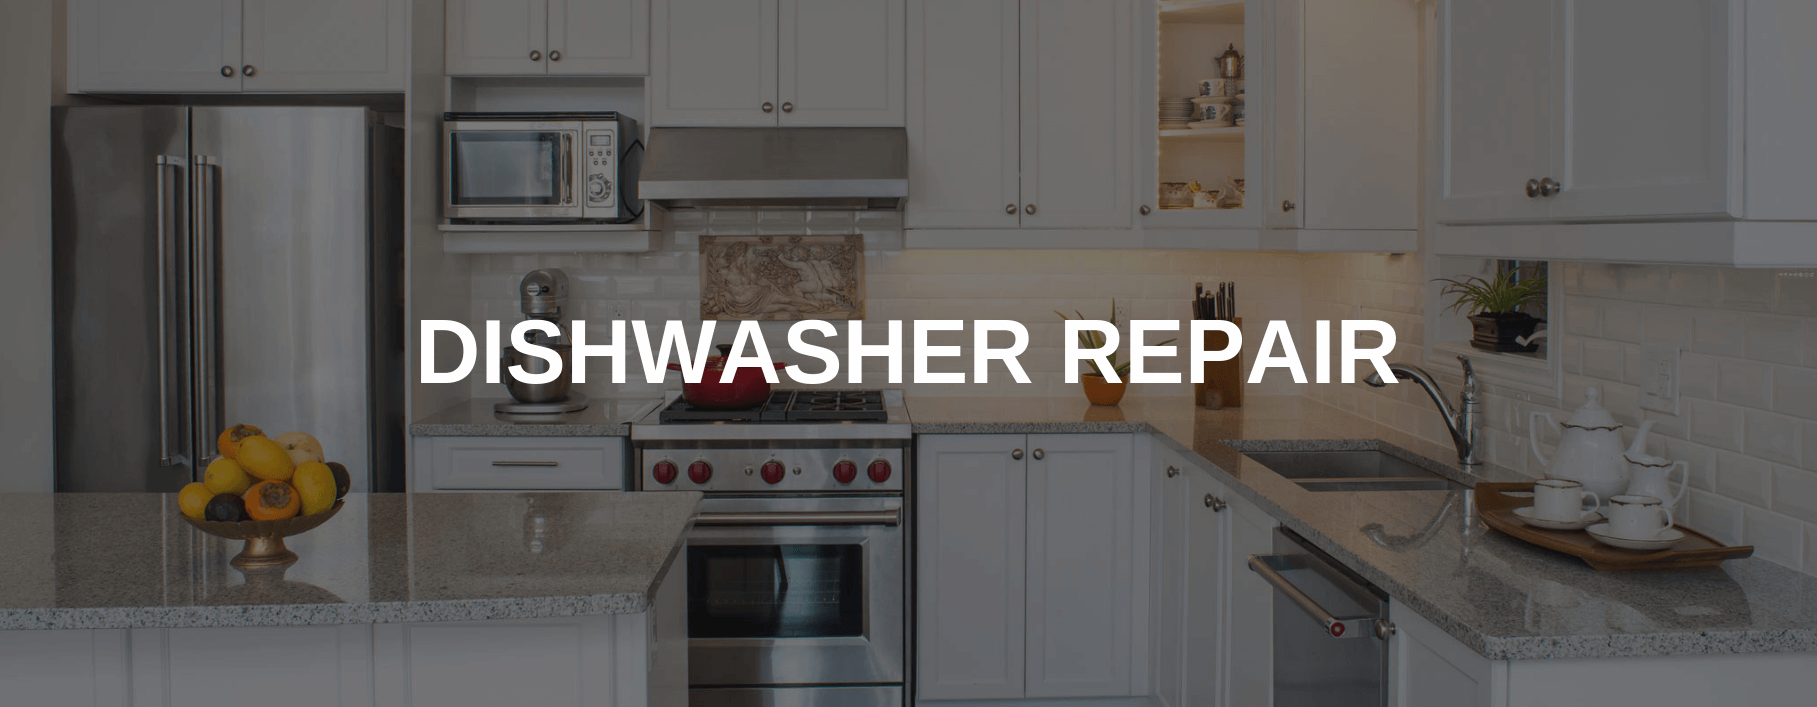 dishwasher repair auburn